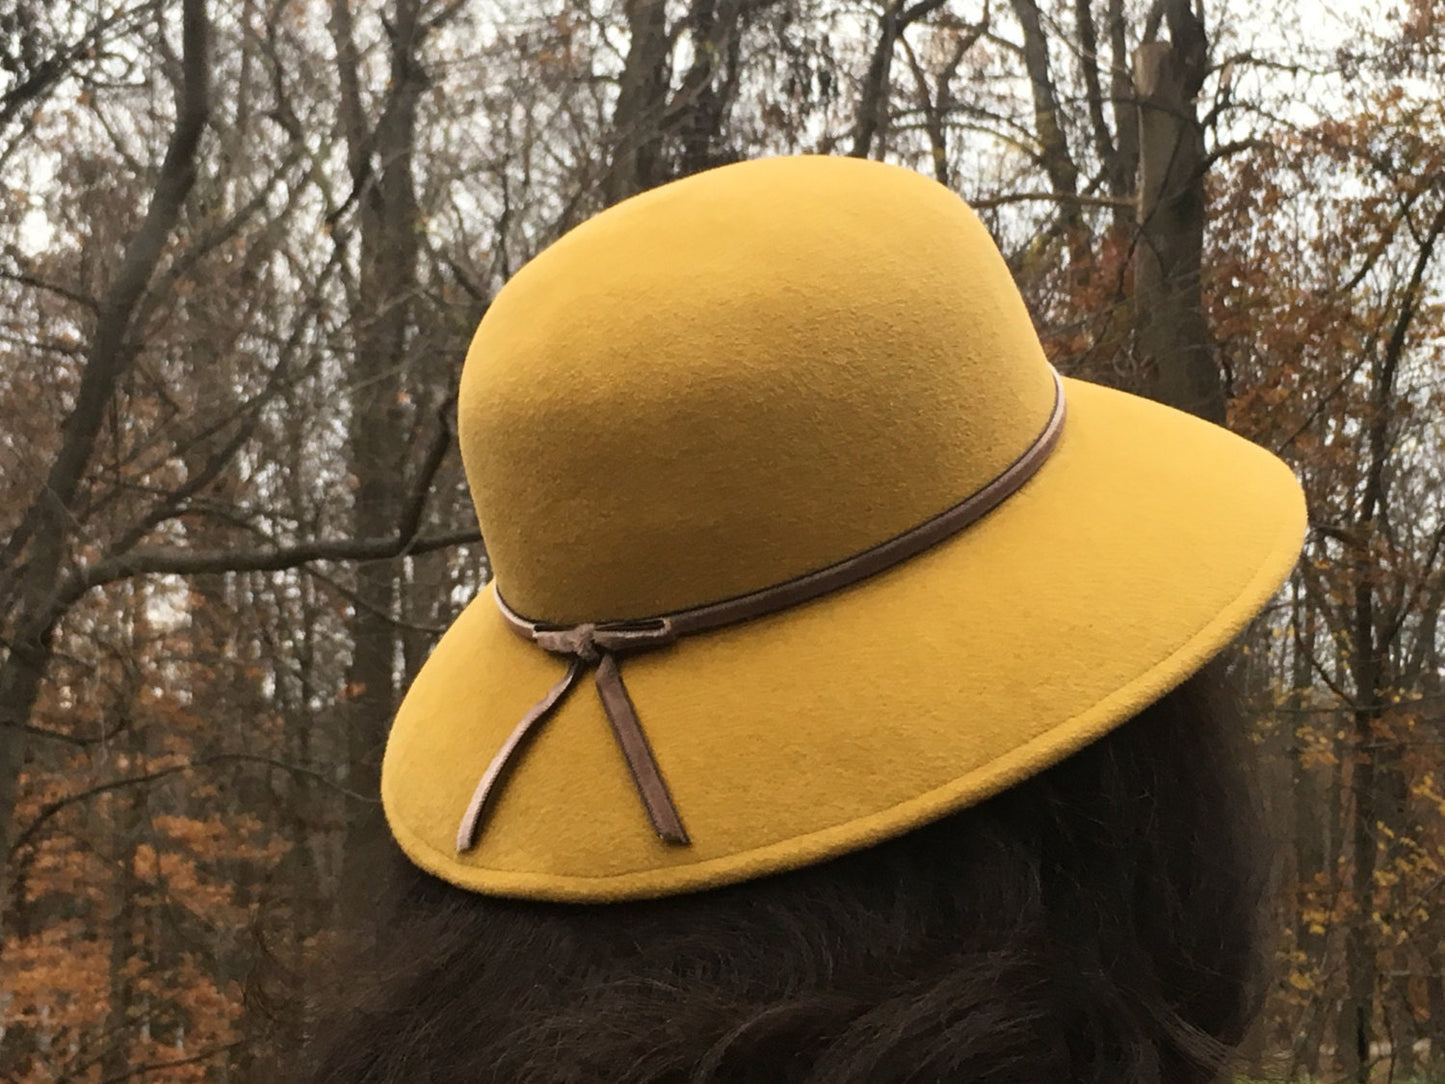 Soft Yellow Gold Velour Wool Felt Hat with Brim! Simple Velvet Ribbon Trim-Church Hat-Wedding Hat-Christmas Hat! 'Go To Hat' Comfy Hat